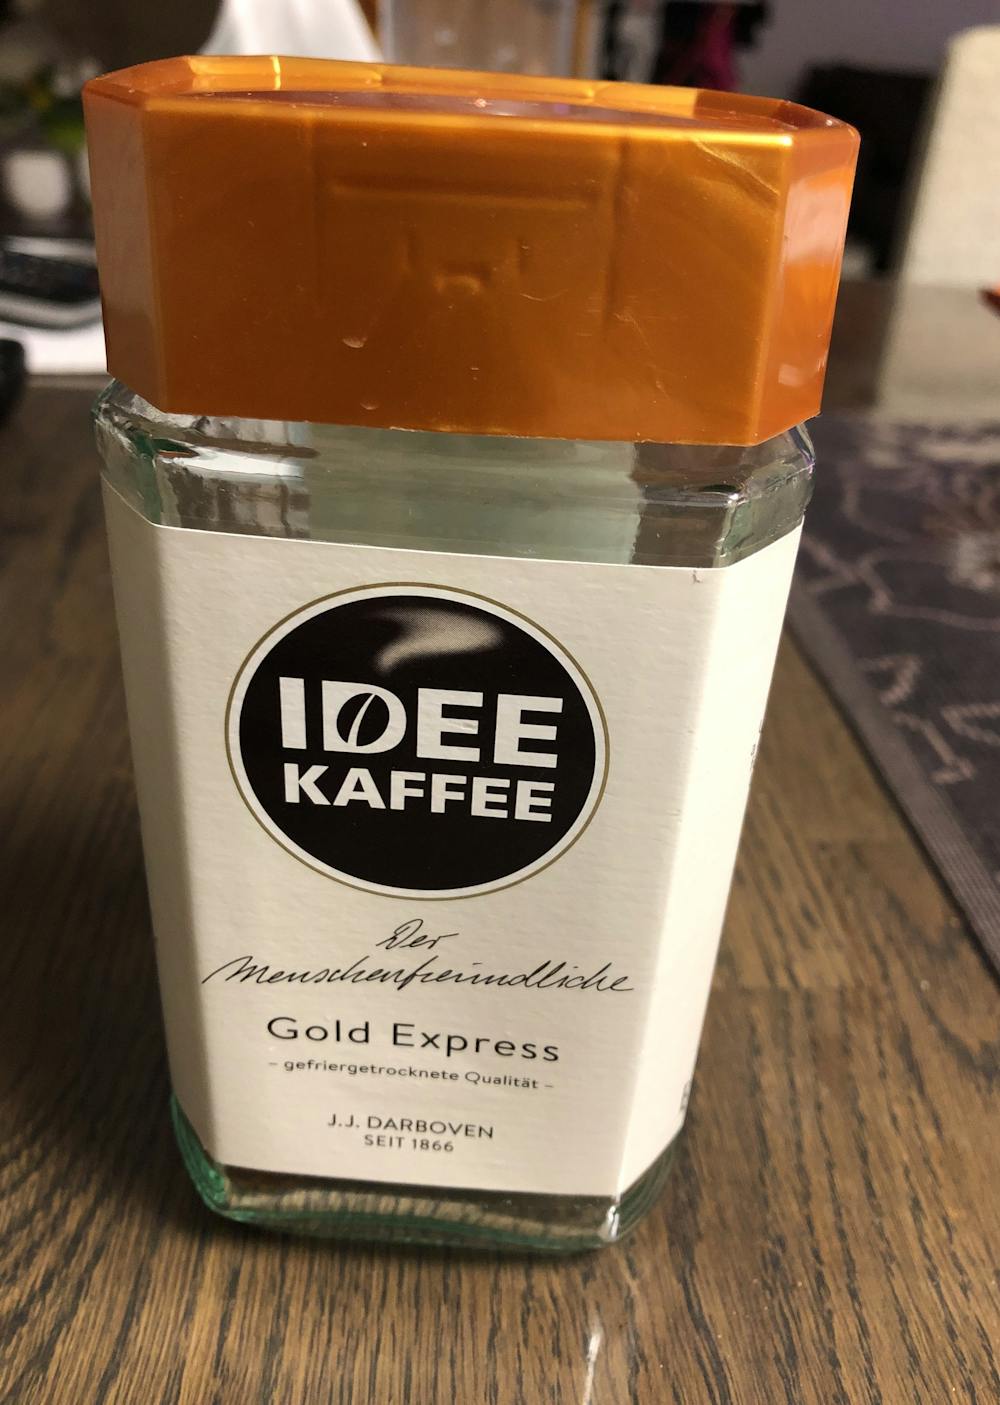 Gold express, Idee kaffee